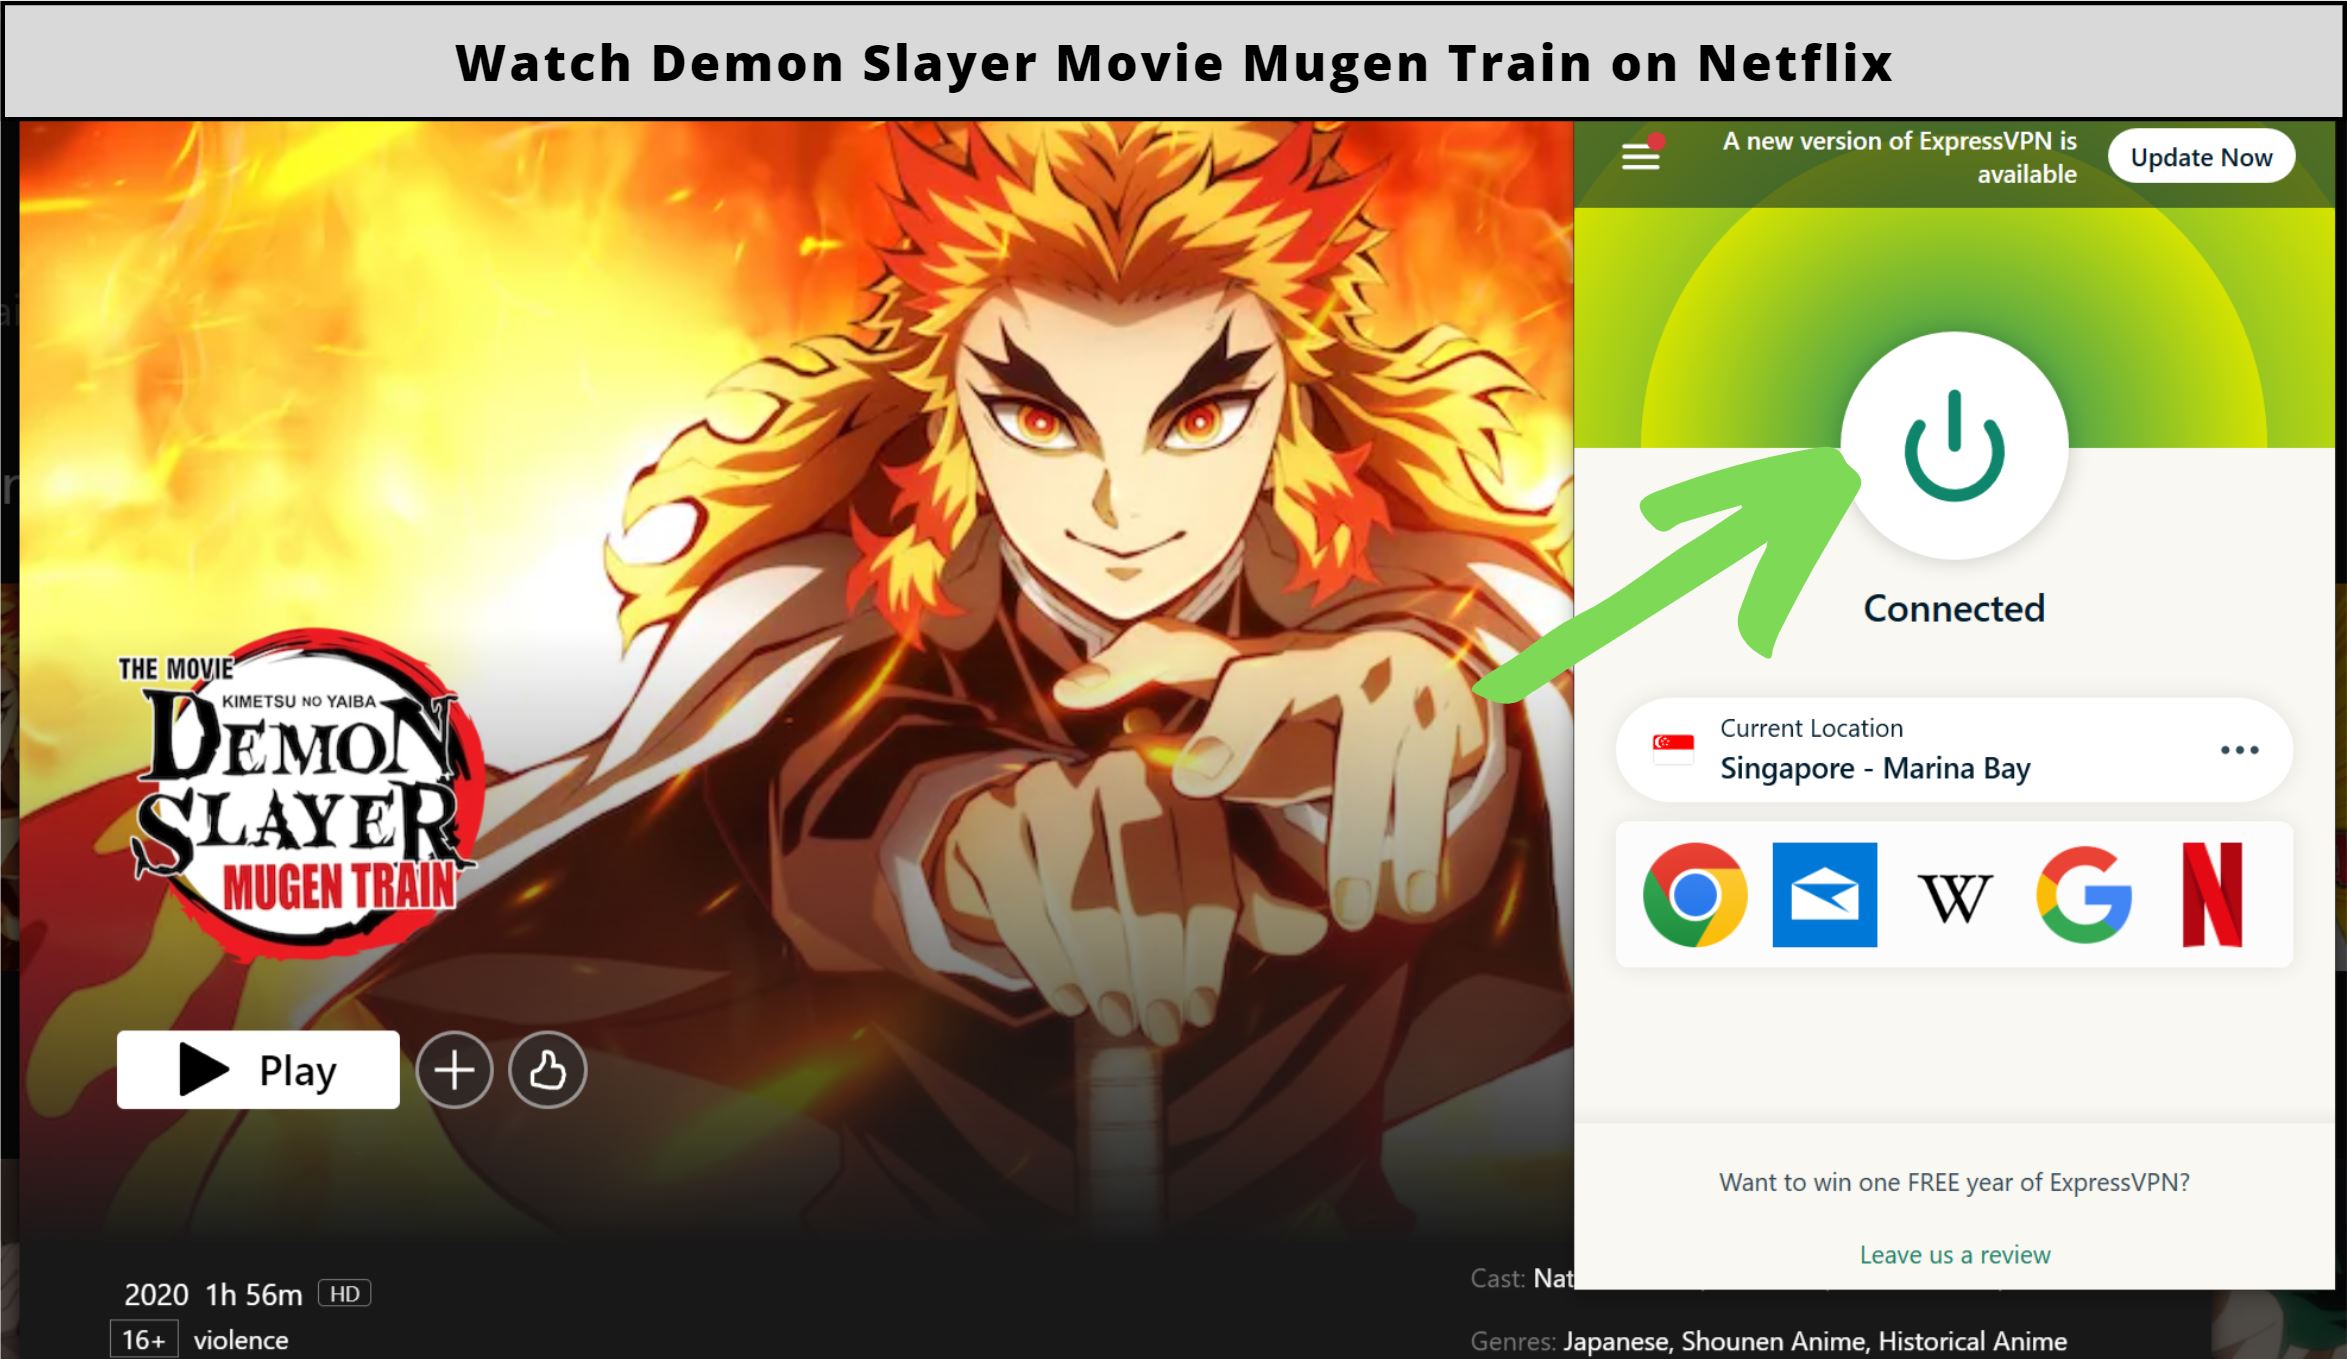 Is Demon Slayer: Mugen Train on Netflix?